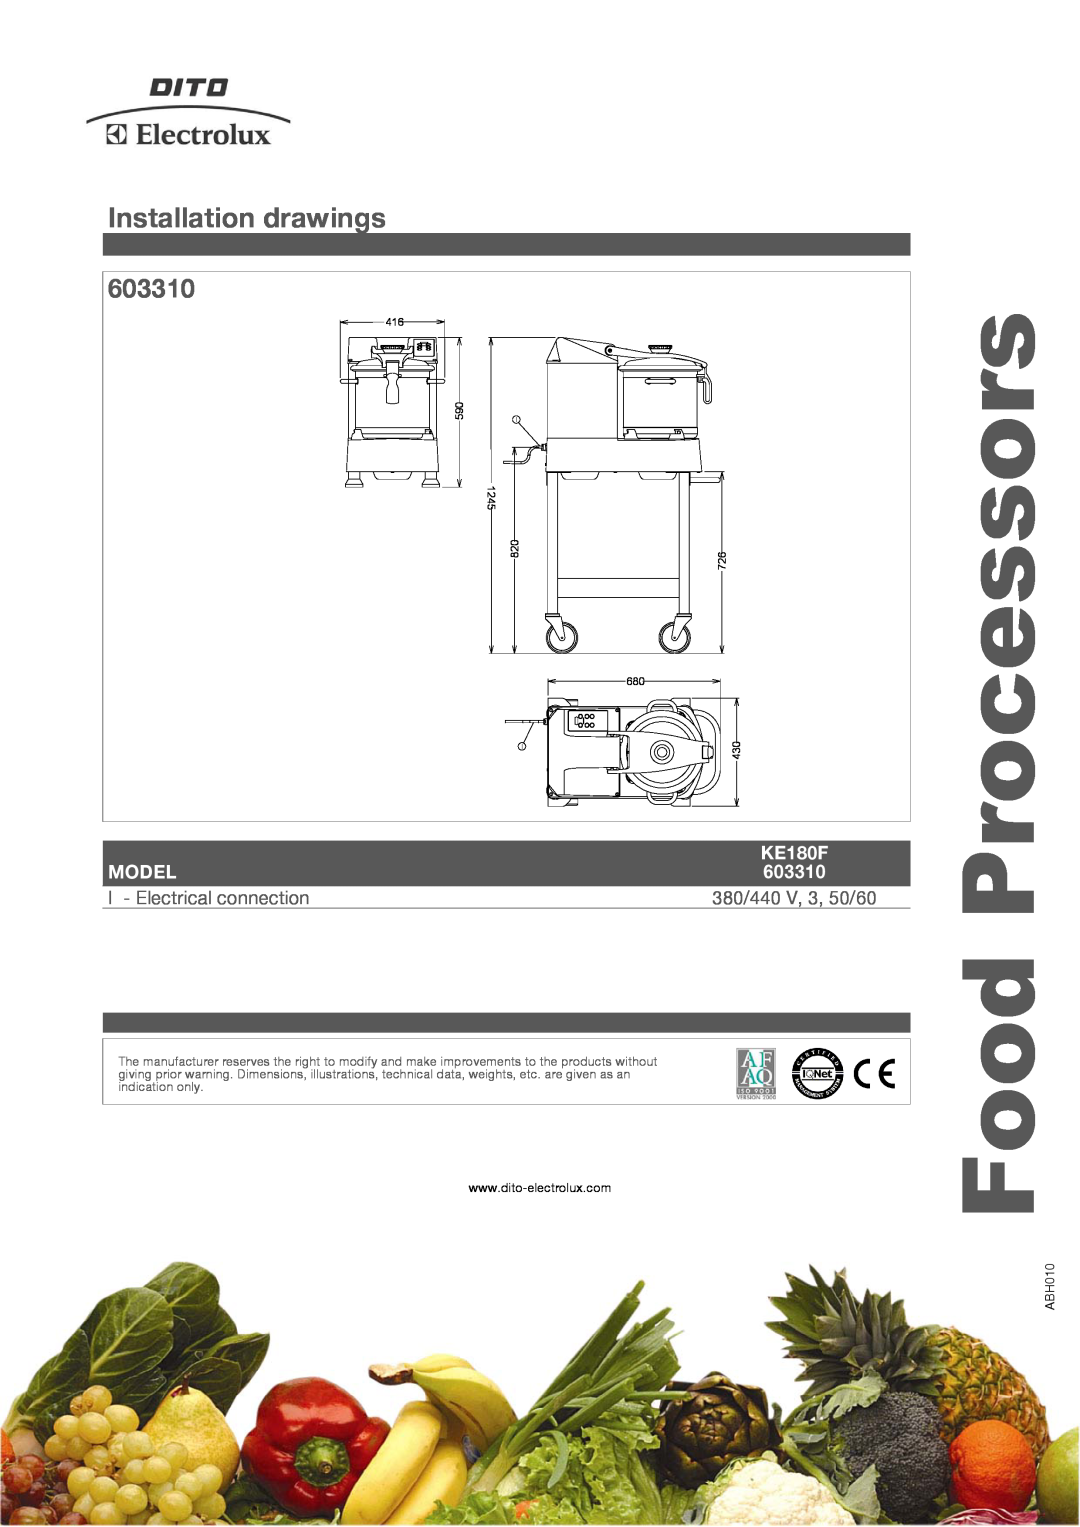 Electrolux KE180F Installation drawings, 603310, Food Processors, Model, I - Electrical connection, 380/440 V, 3, 50/60 